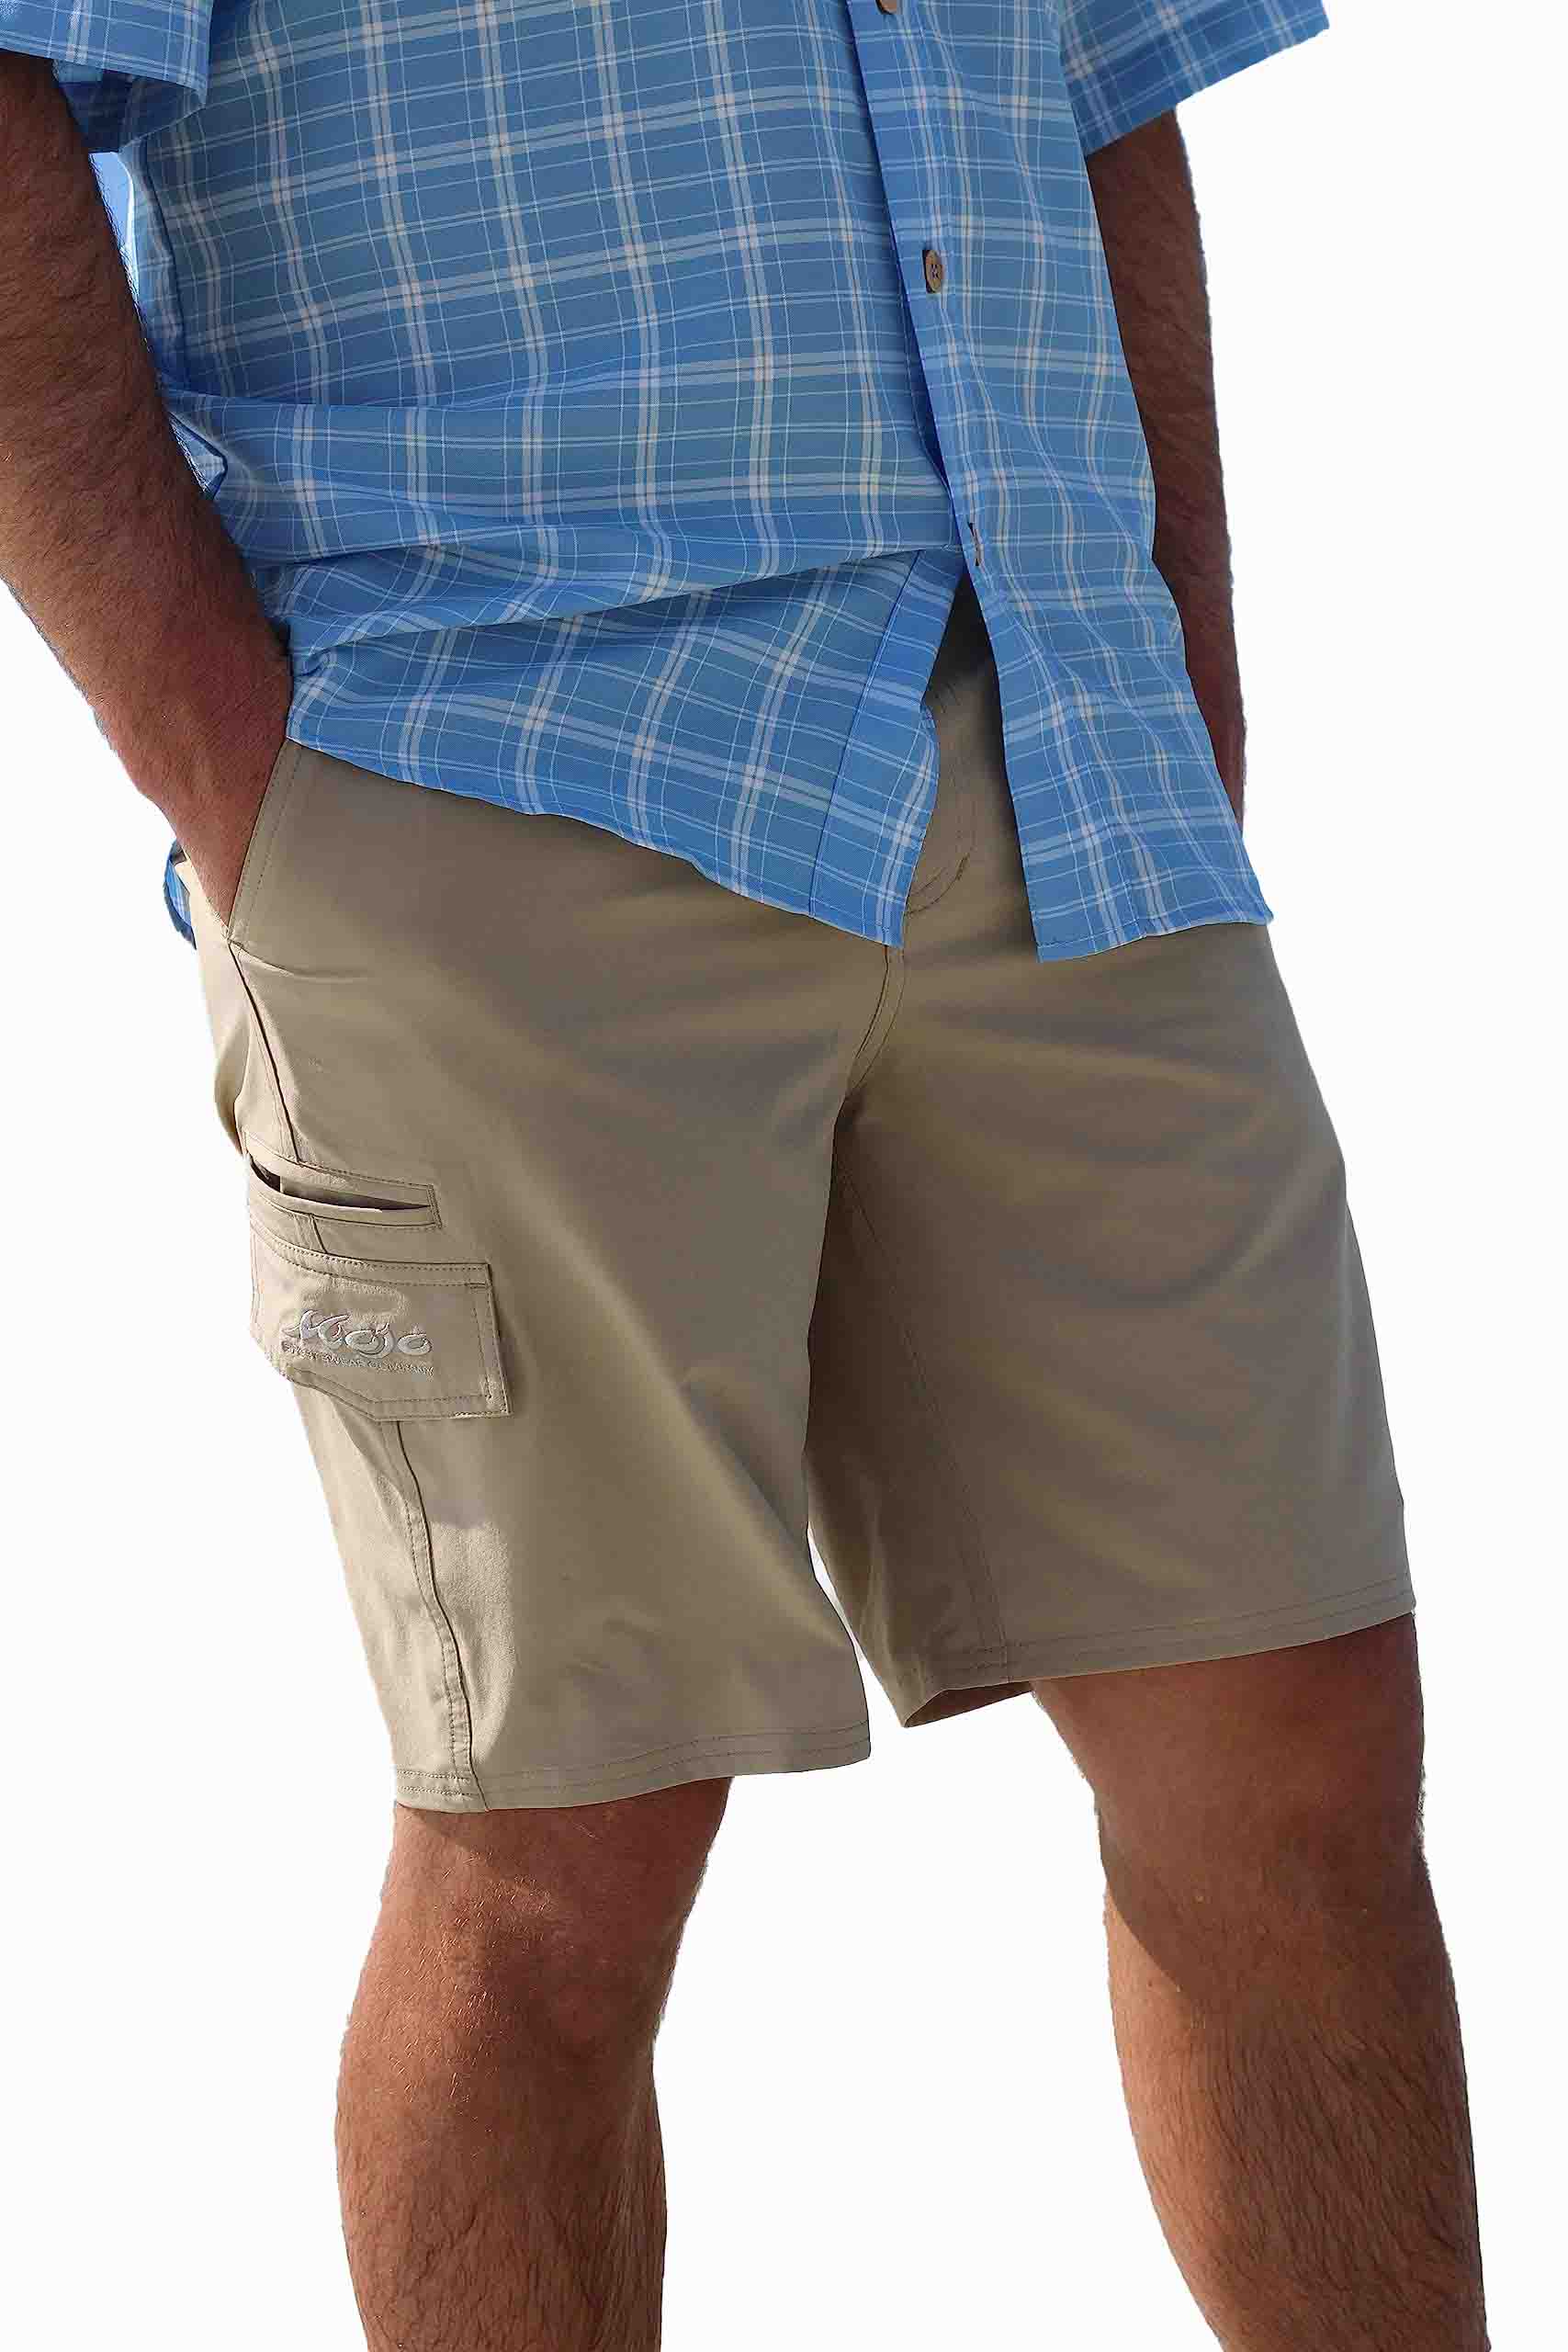 Mojo Sportswear Stretch Fit Shorts in Dune Size: S